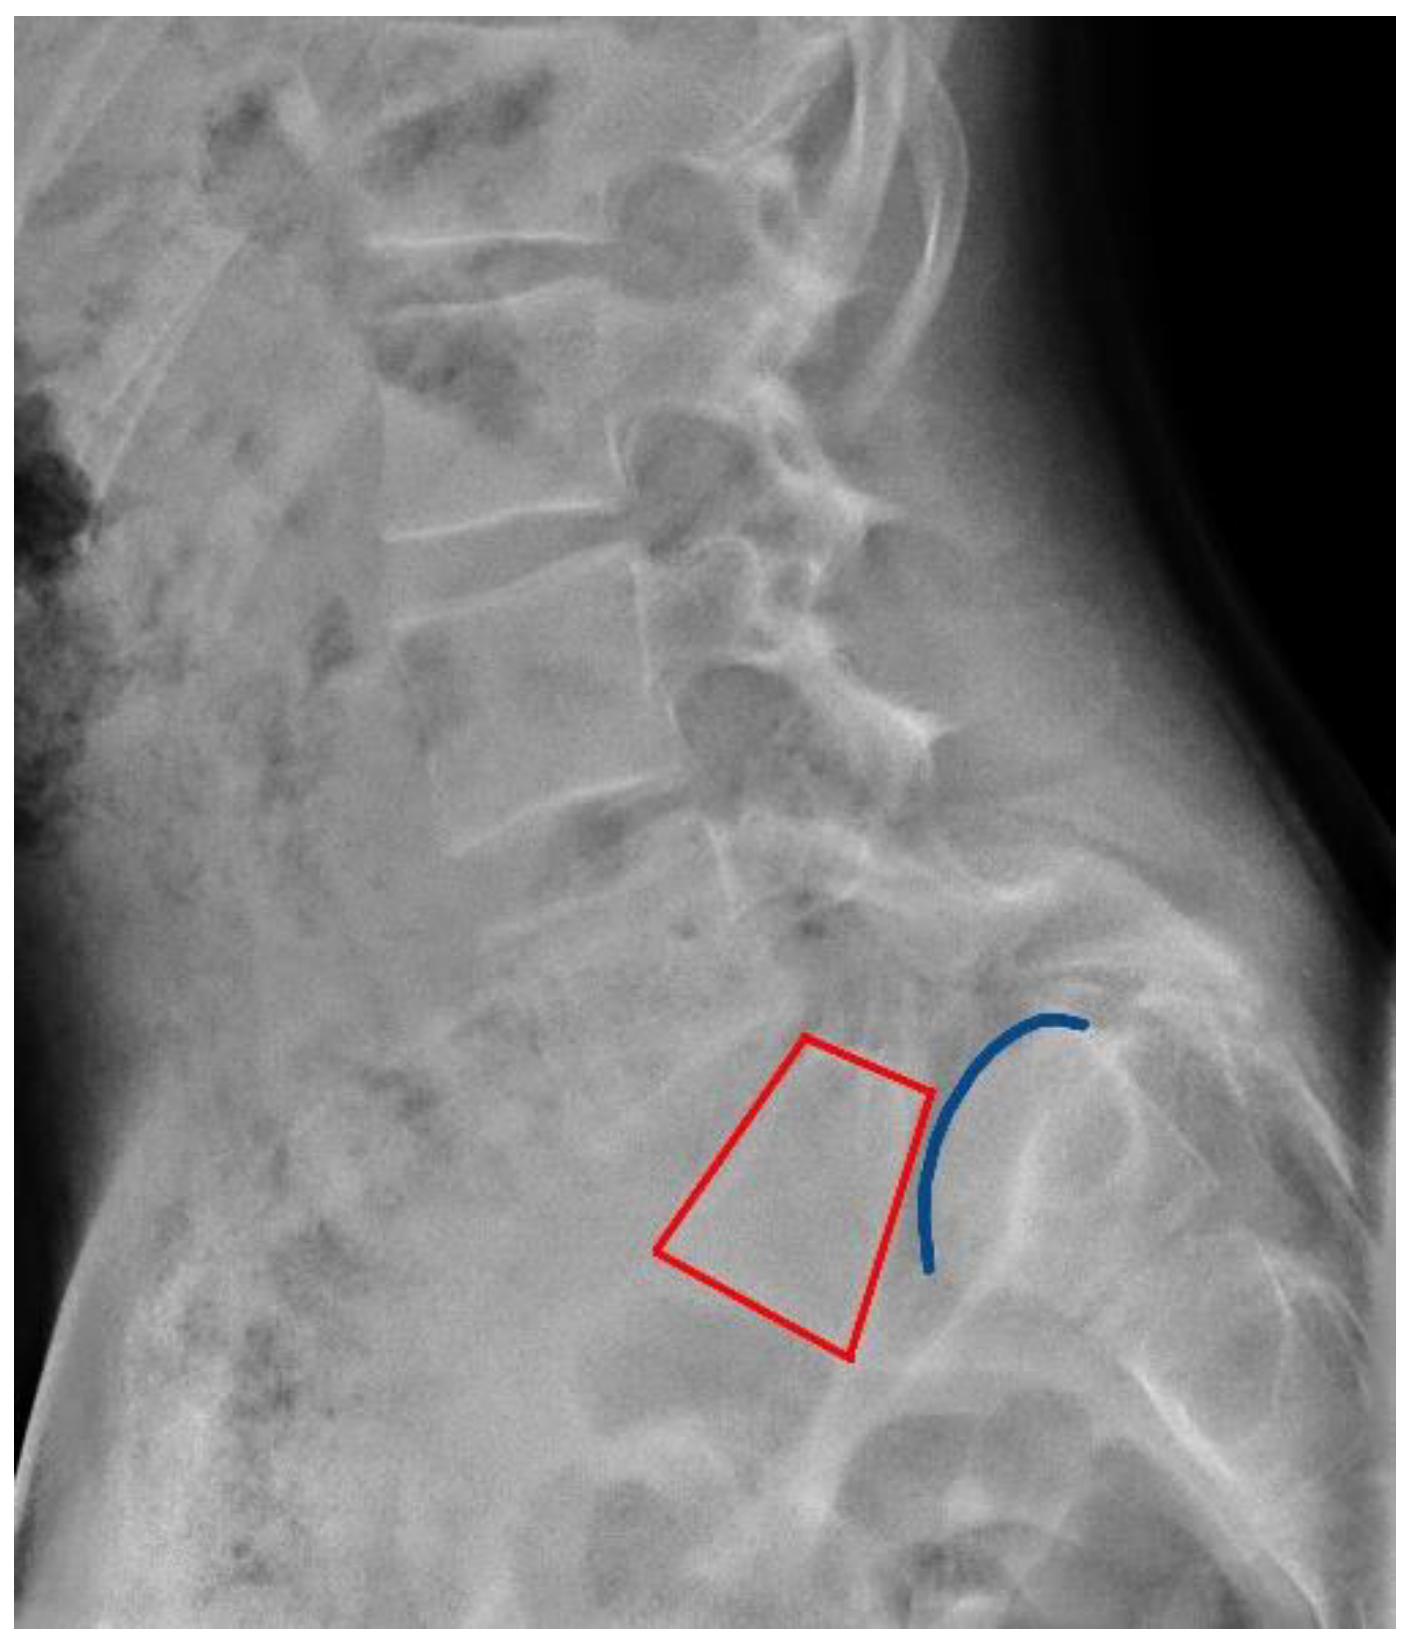 ferguson view of lumbar spine